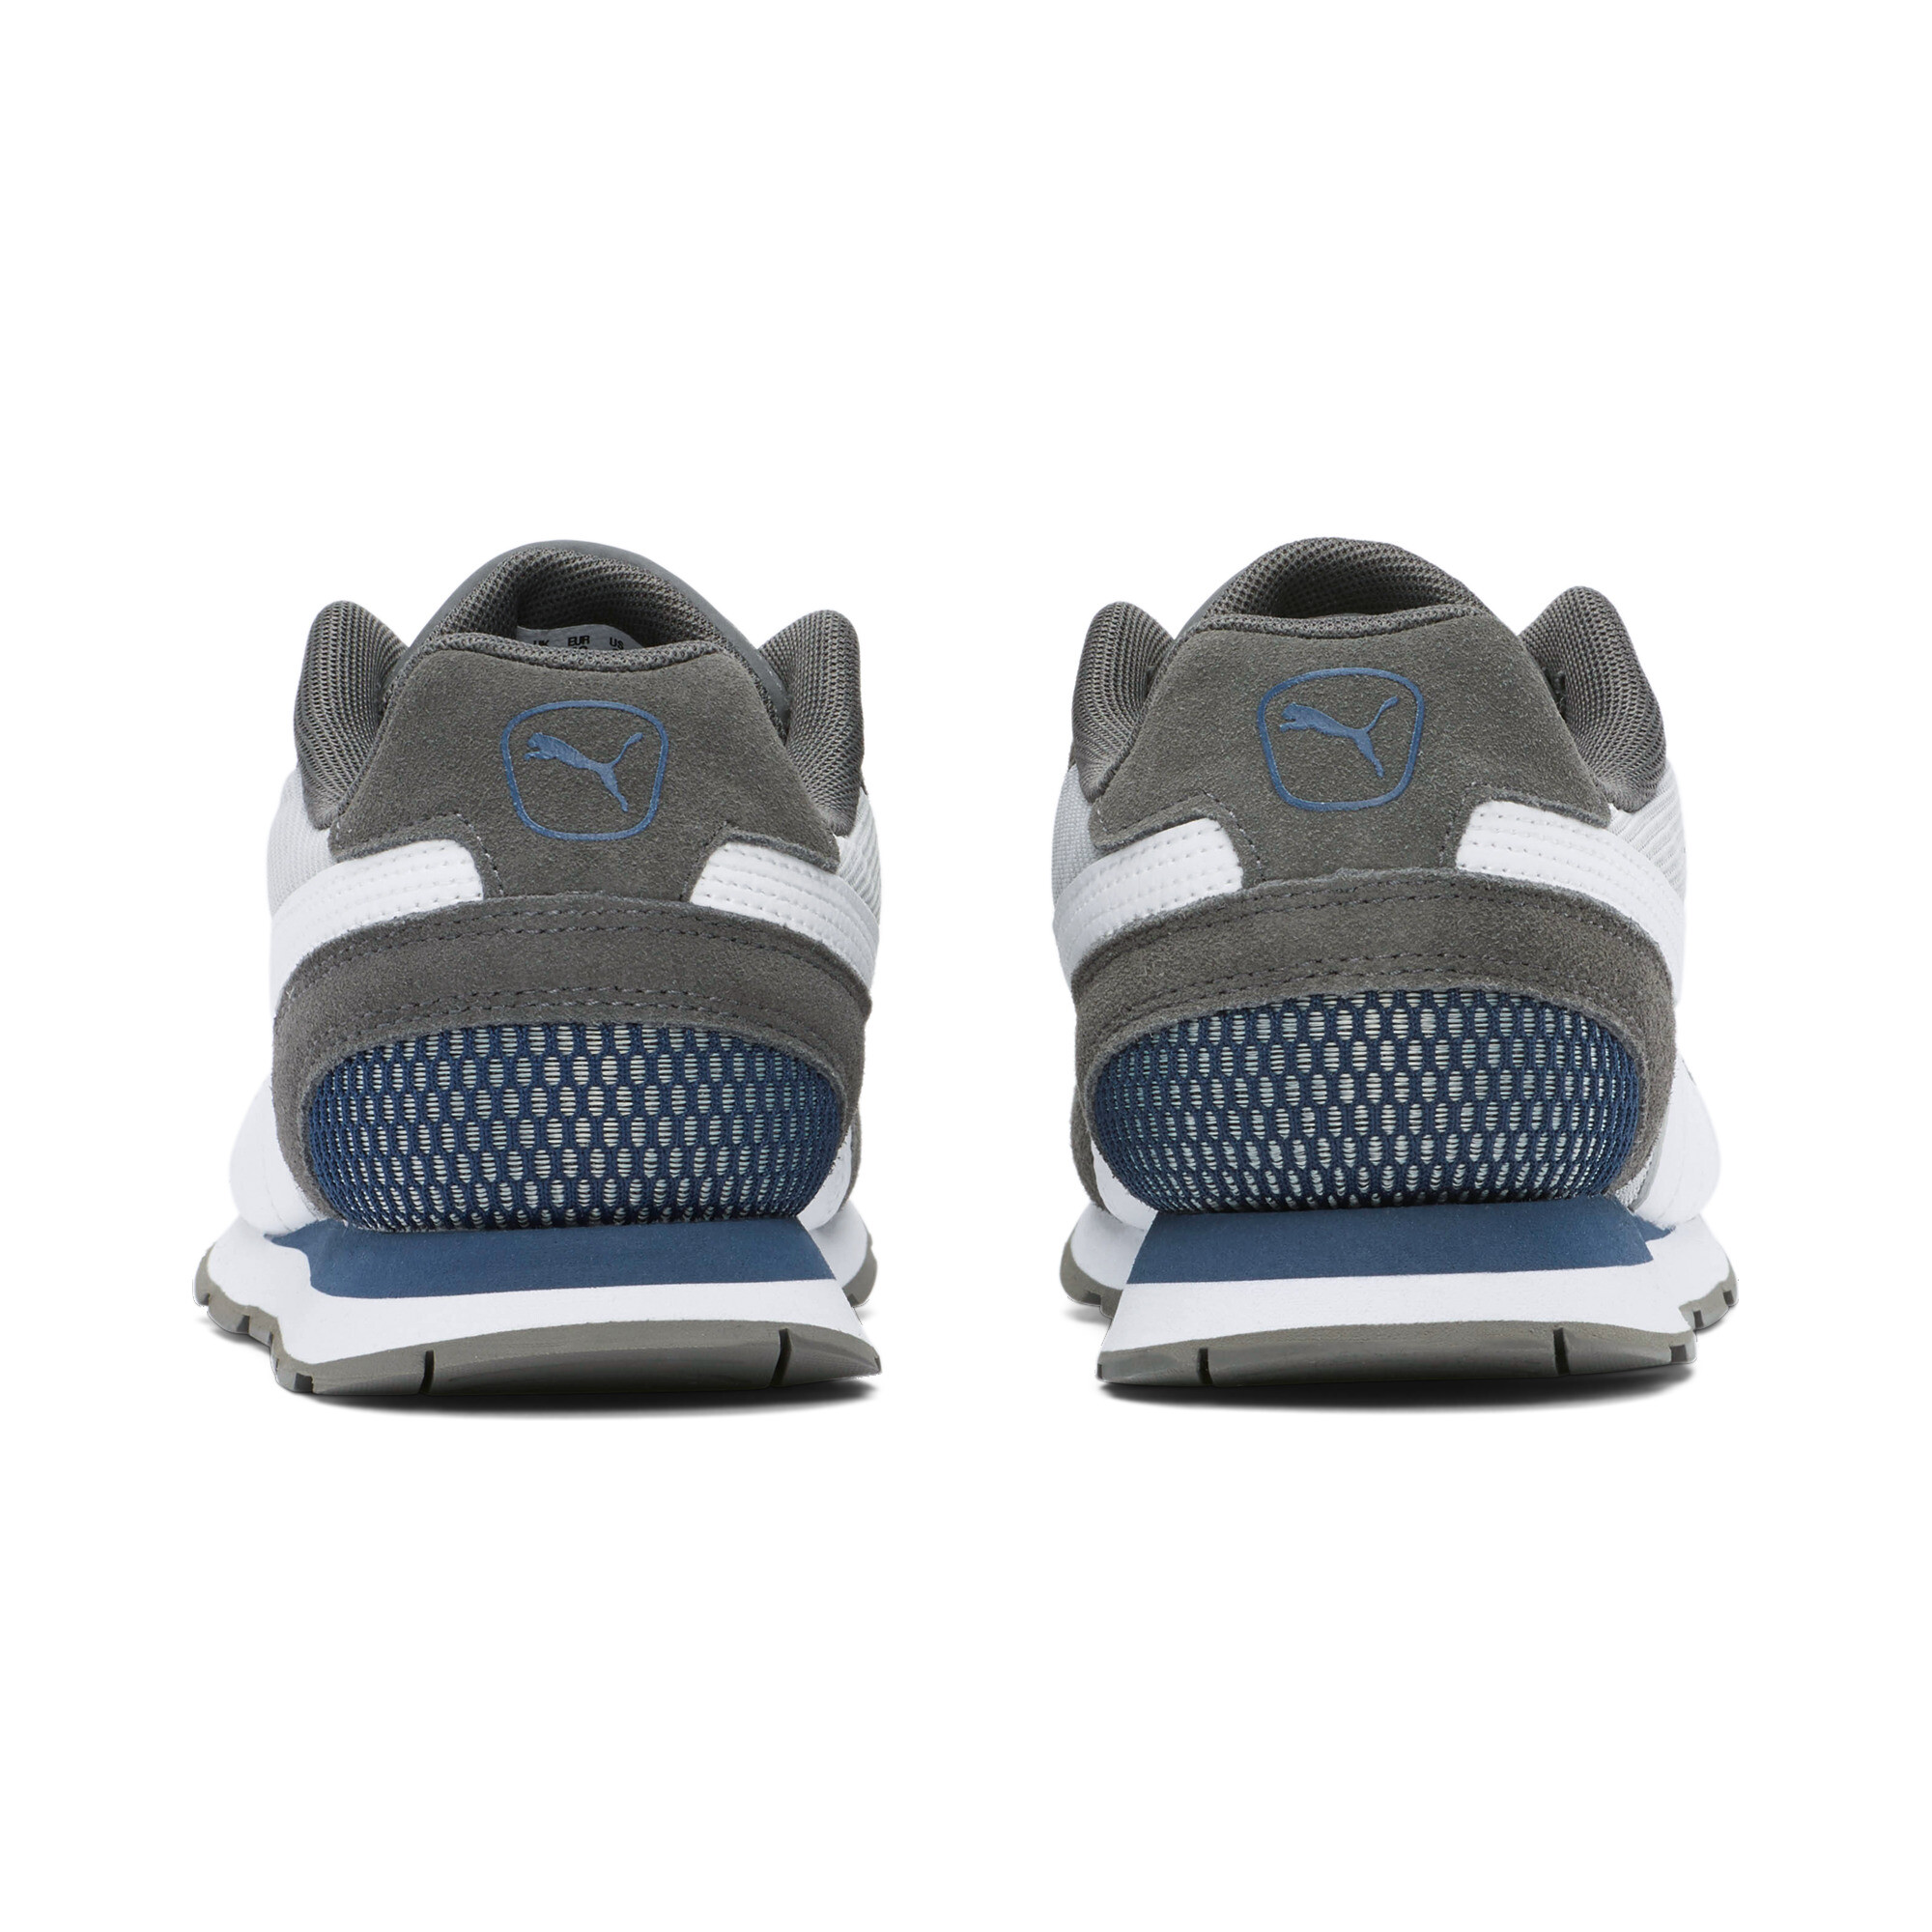 PUMA Men's Vista Sneakers | eBay